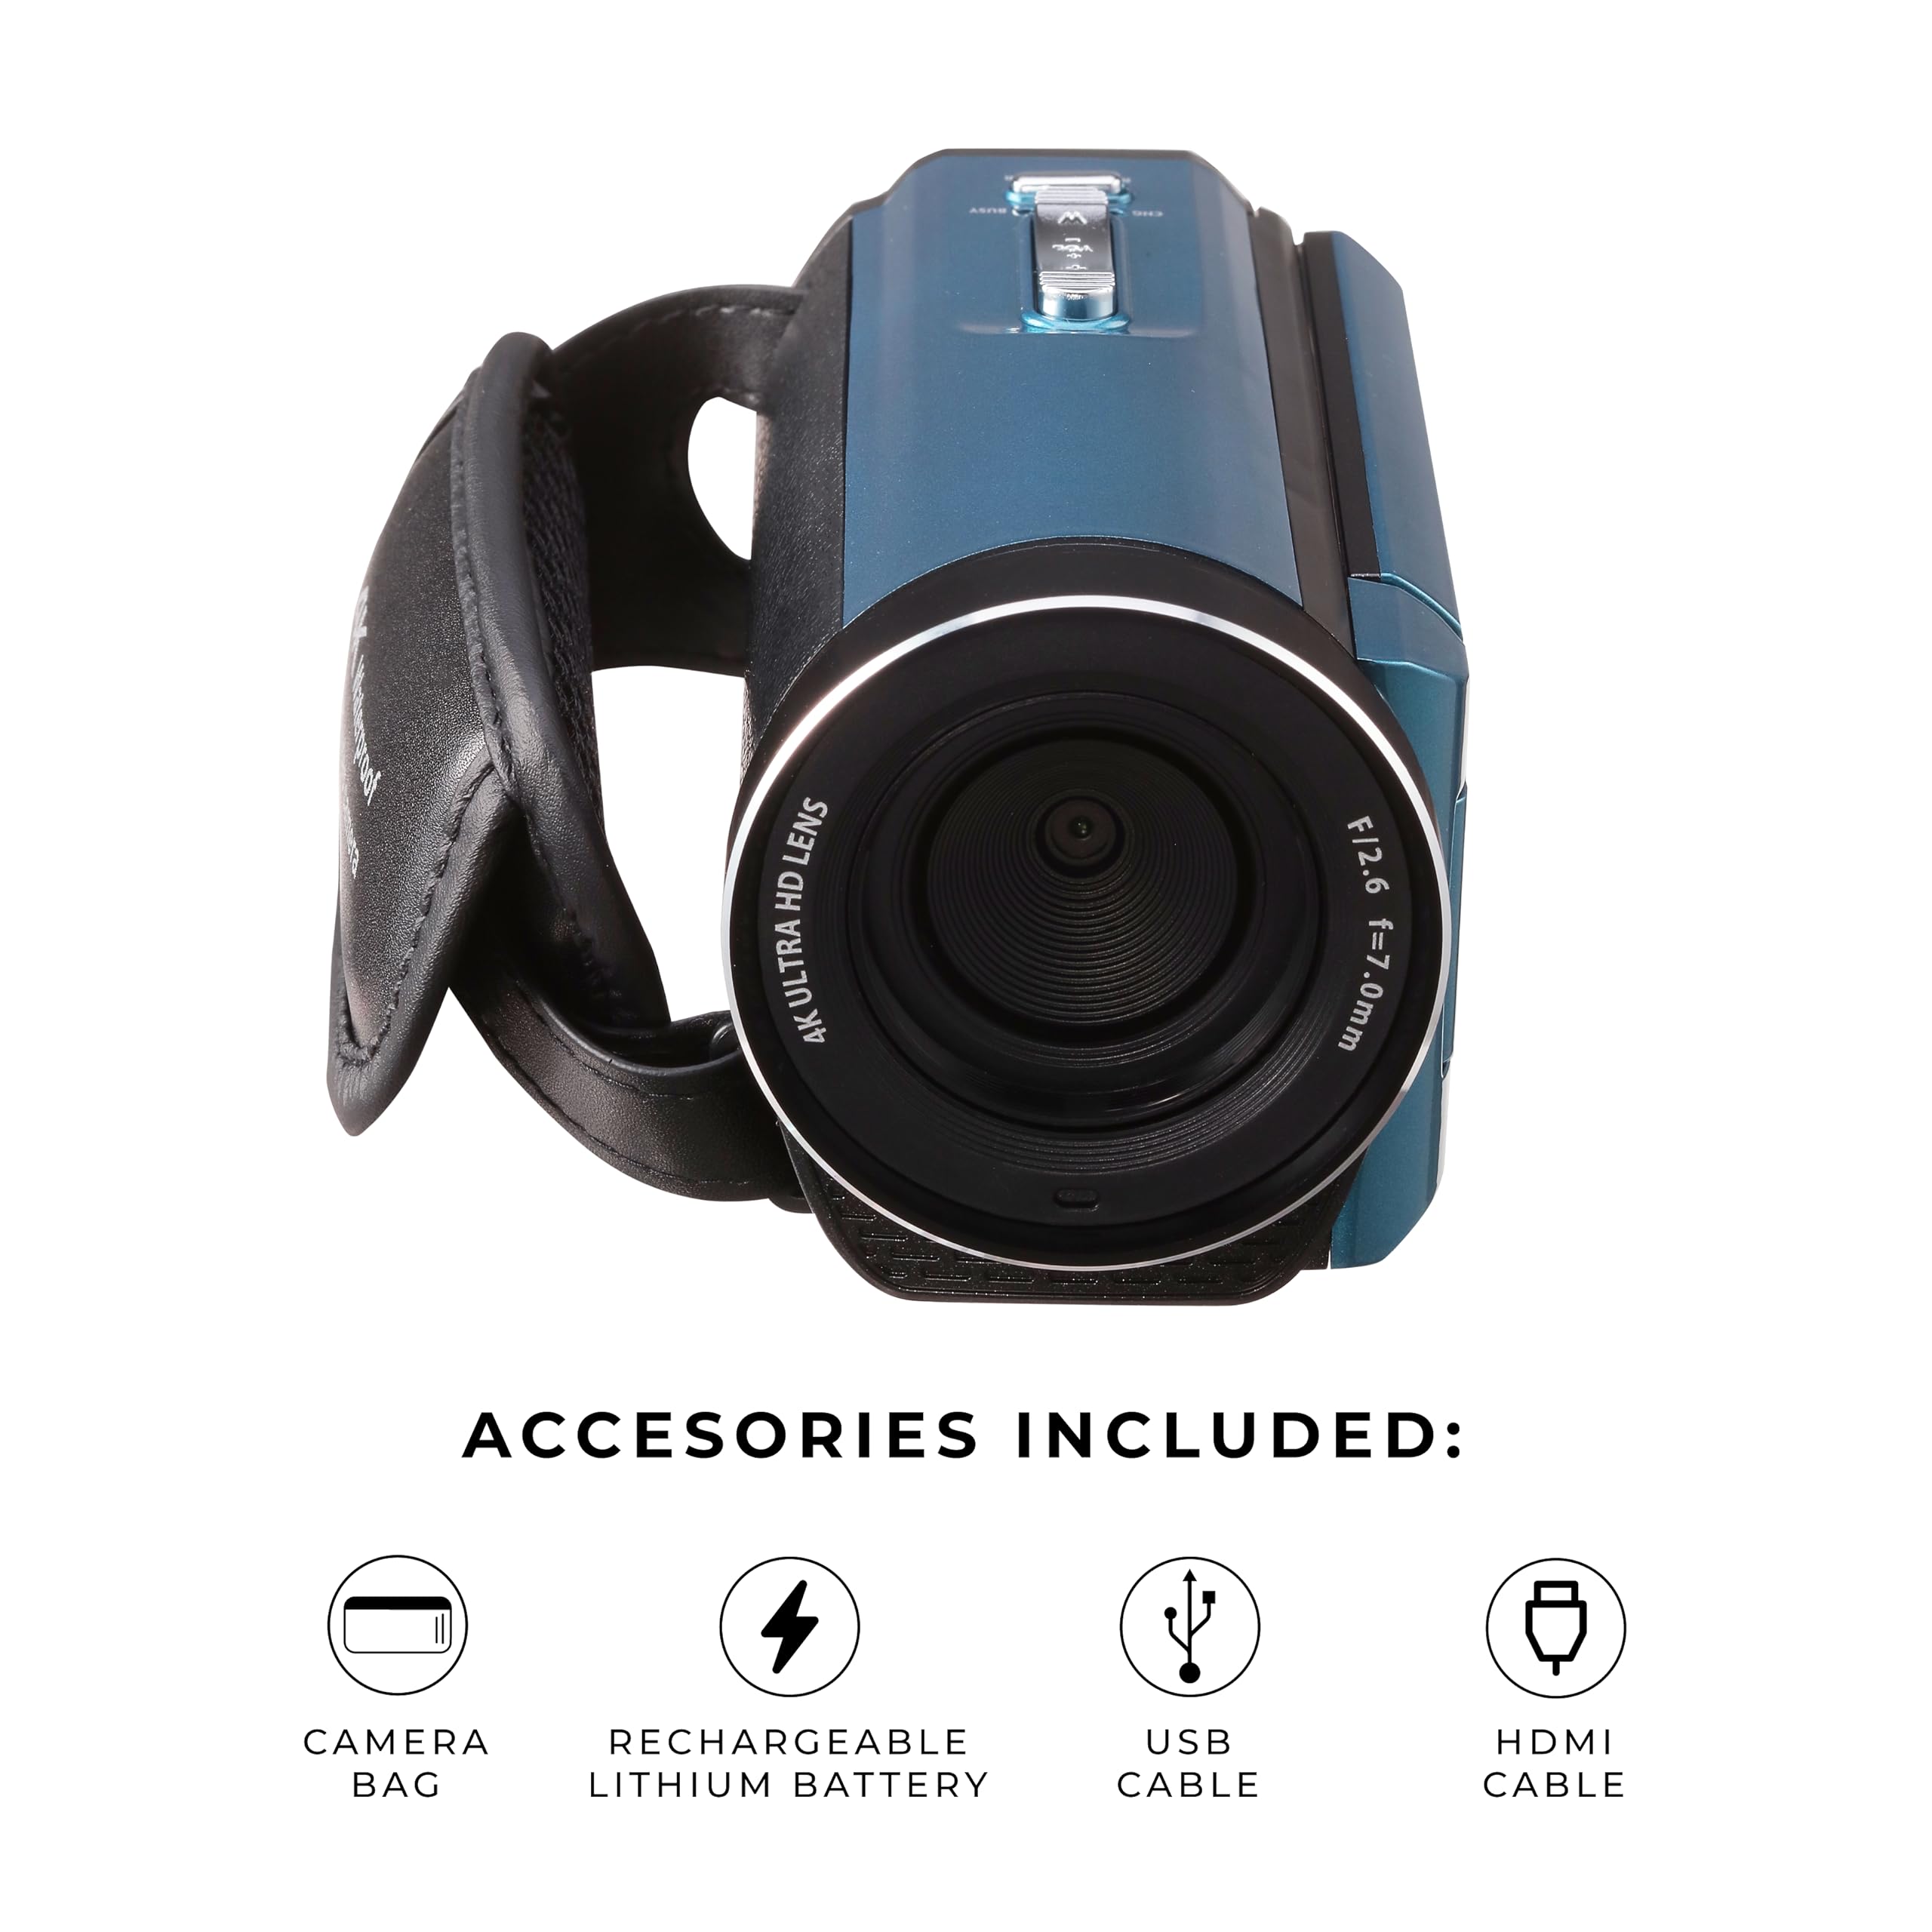 Vivitar - 4K Camcorder Ultra HD Lens, 4K Camera for Video Recording with 56MP, 13MP Sensor, 3